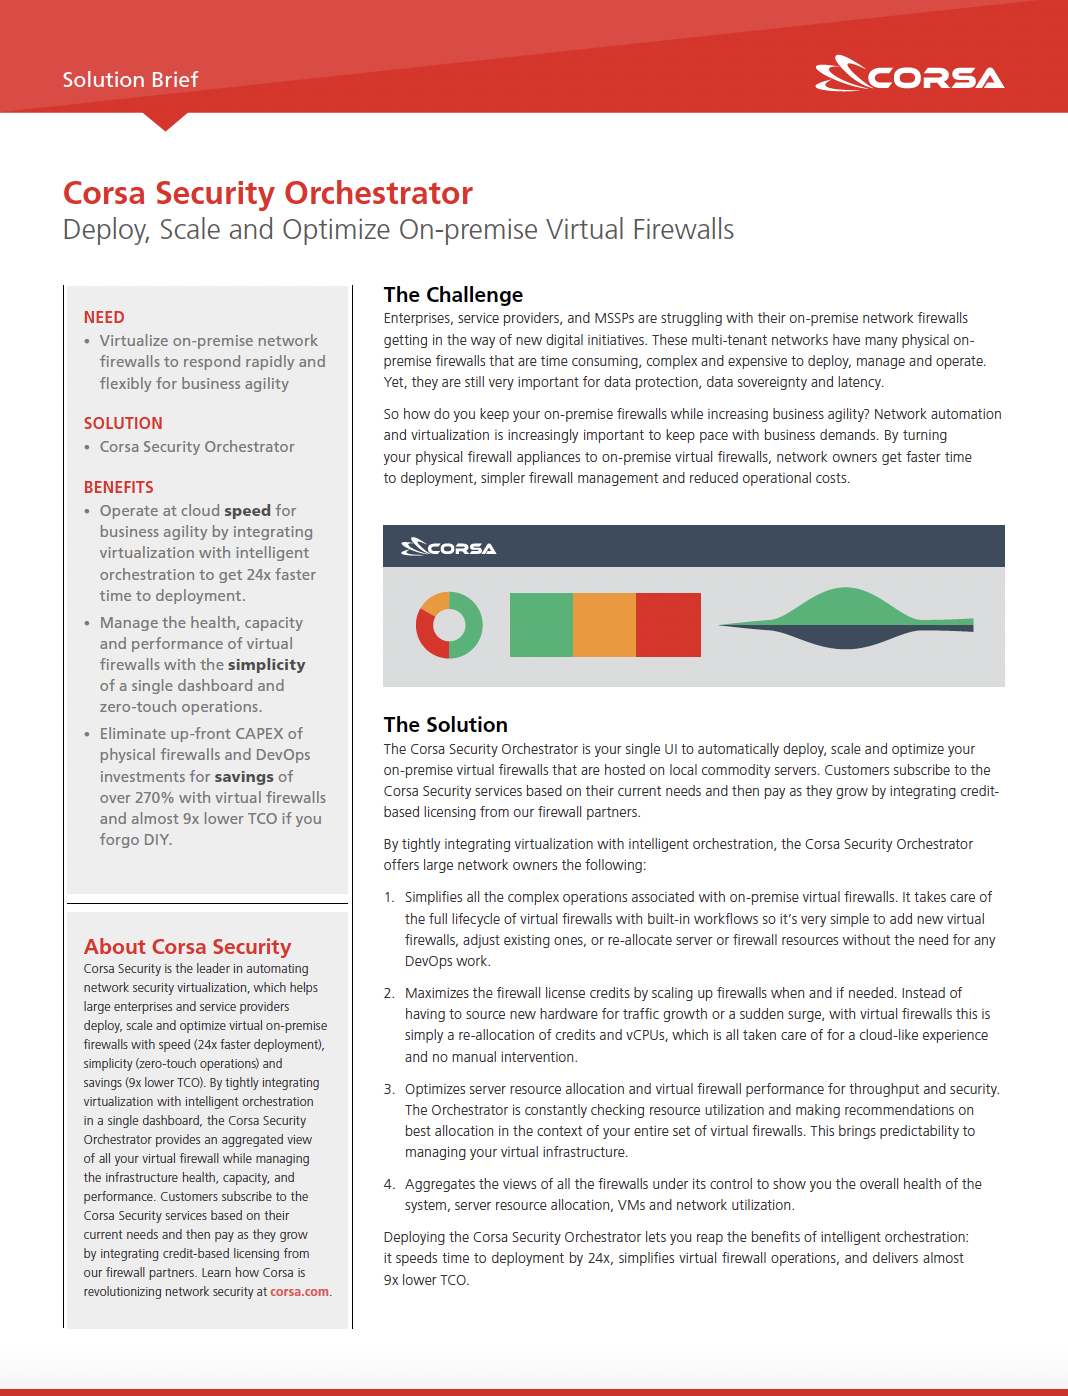 Corsa_SB-Security_Orchestrator-cover_big